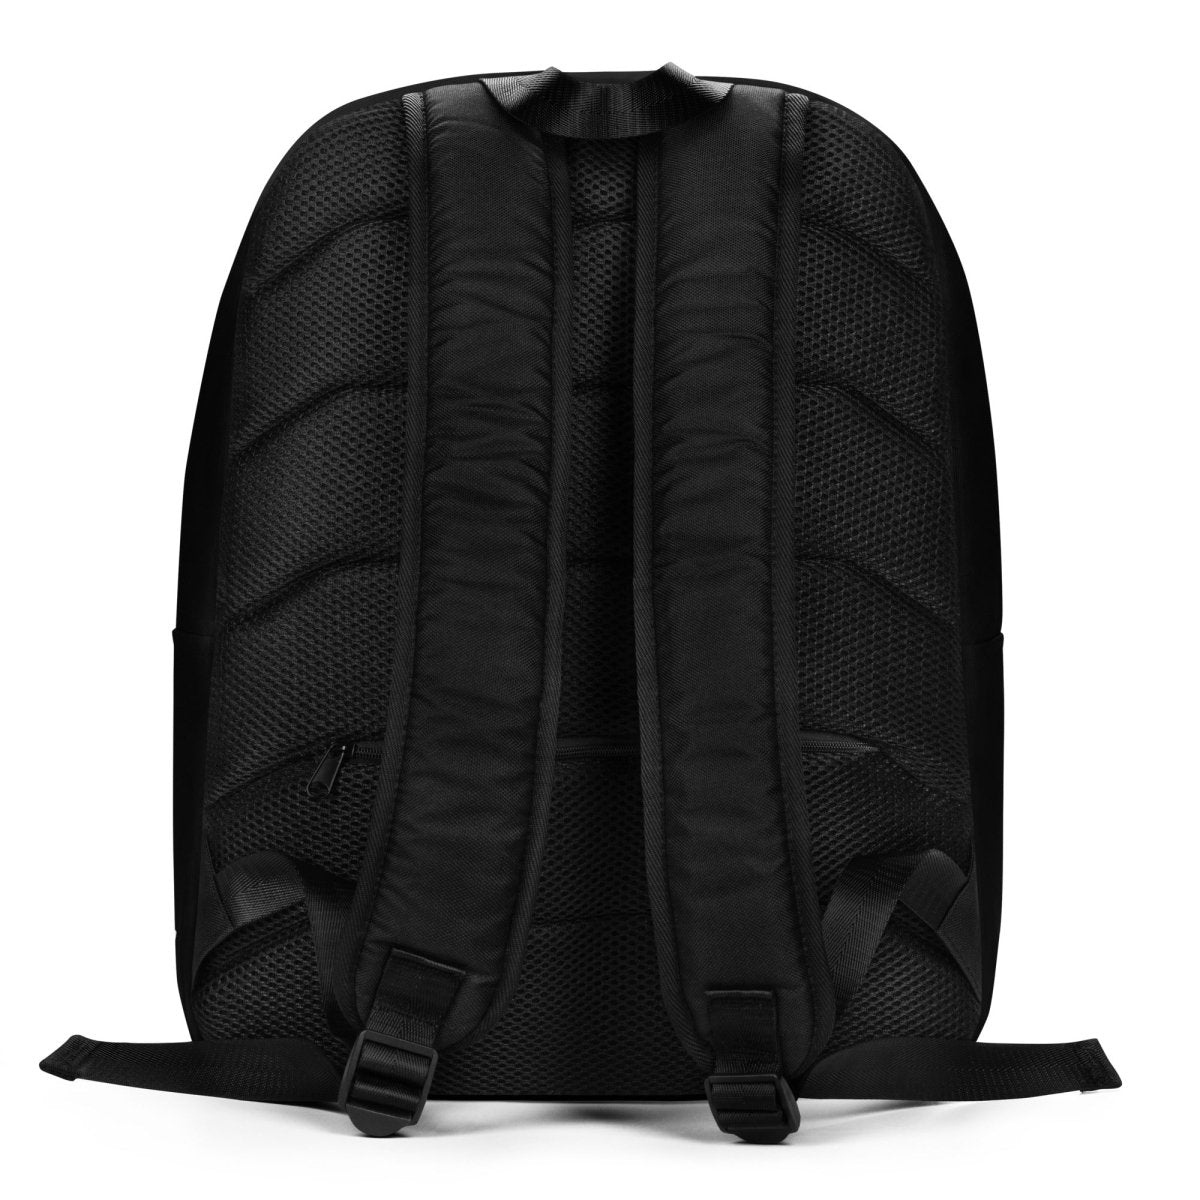 Cannab-Eye Backpack - Mainly High